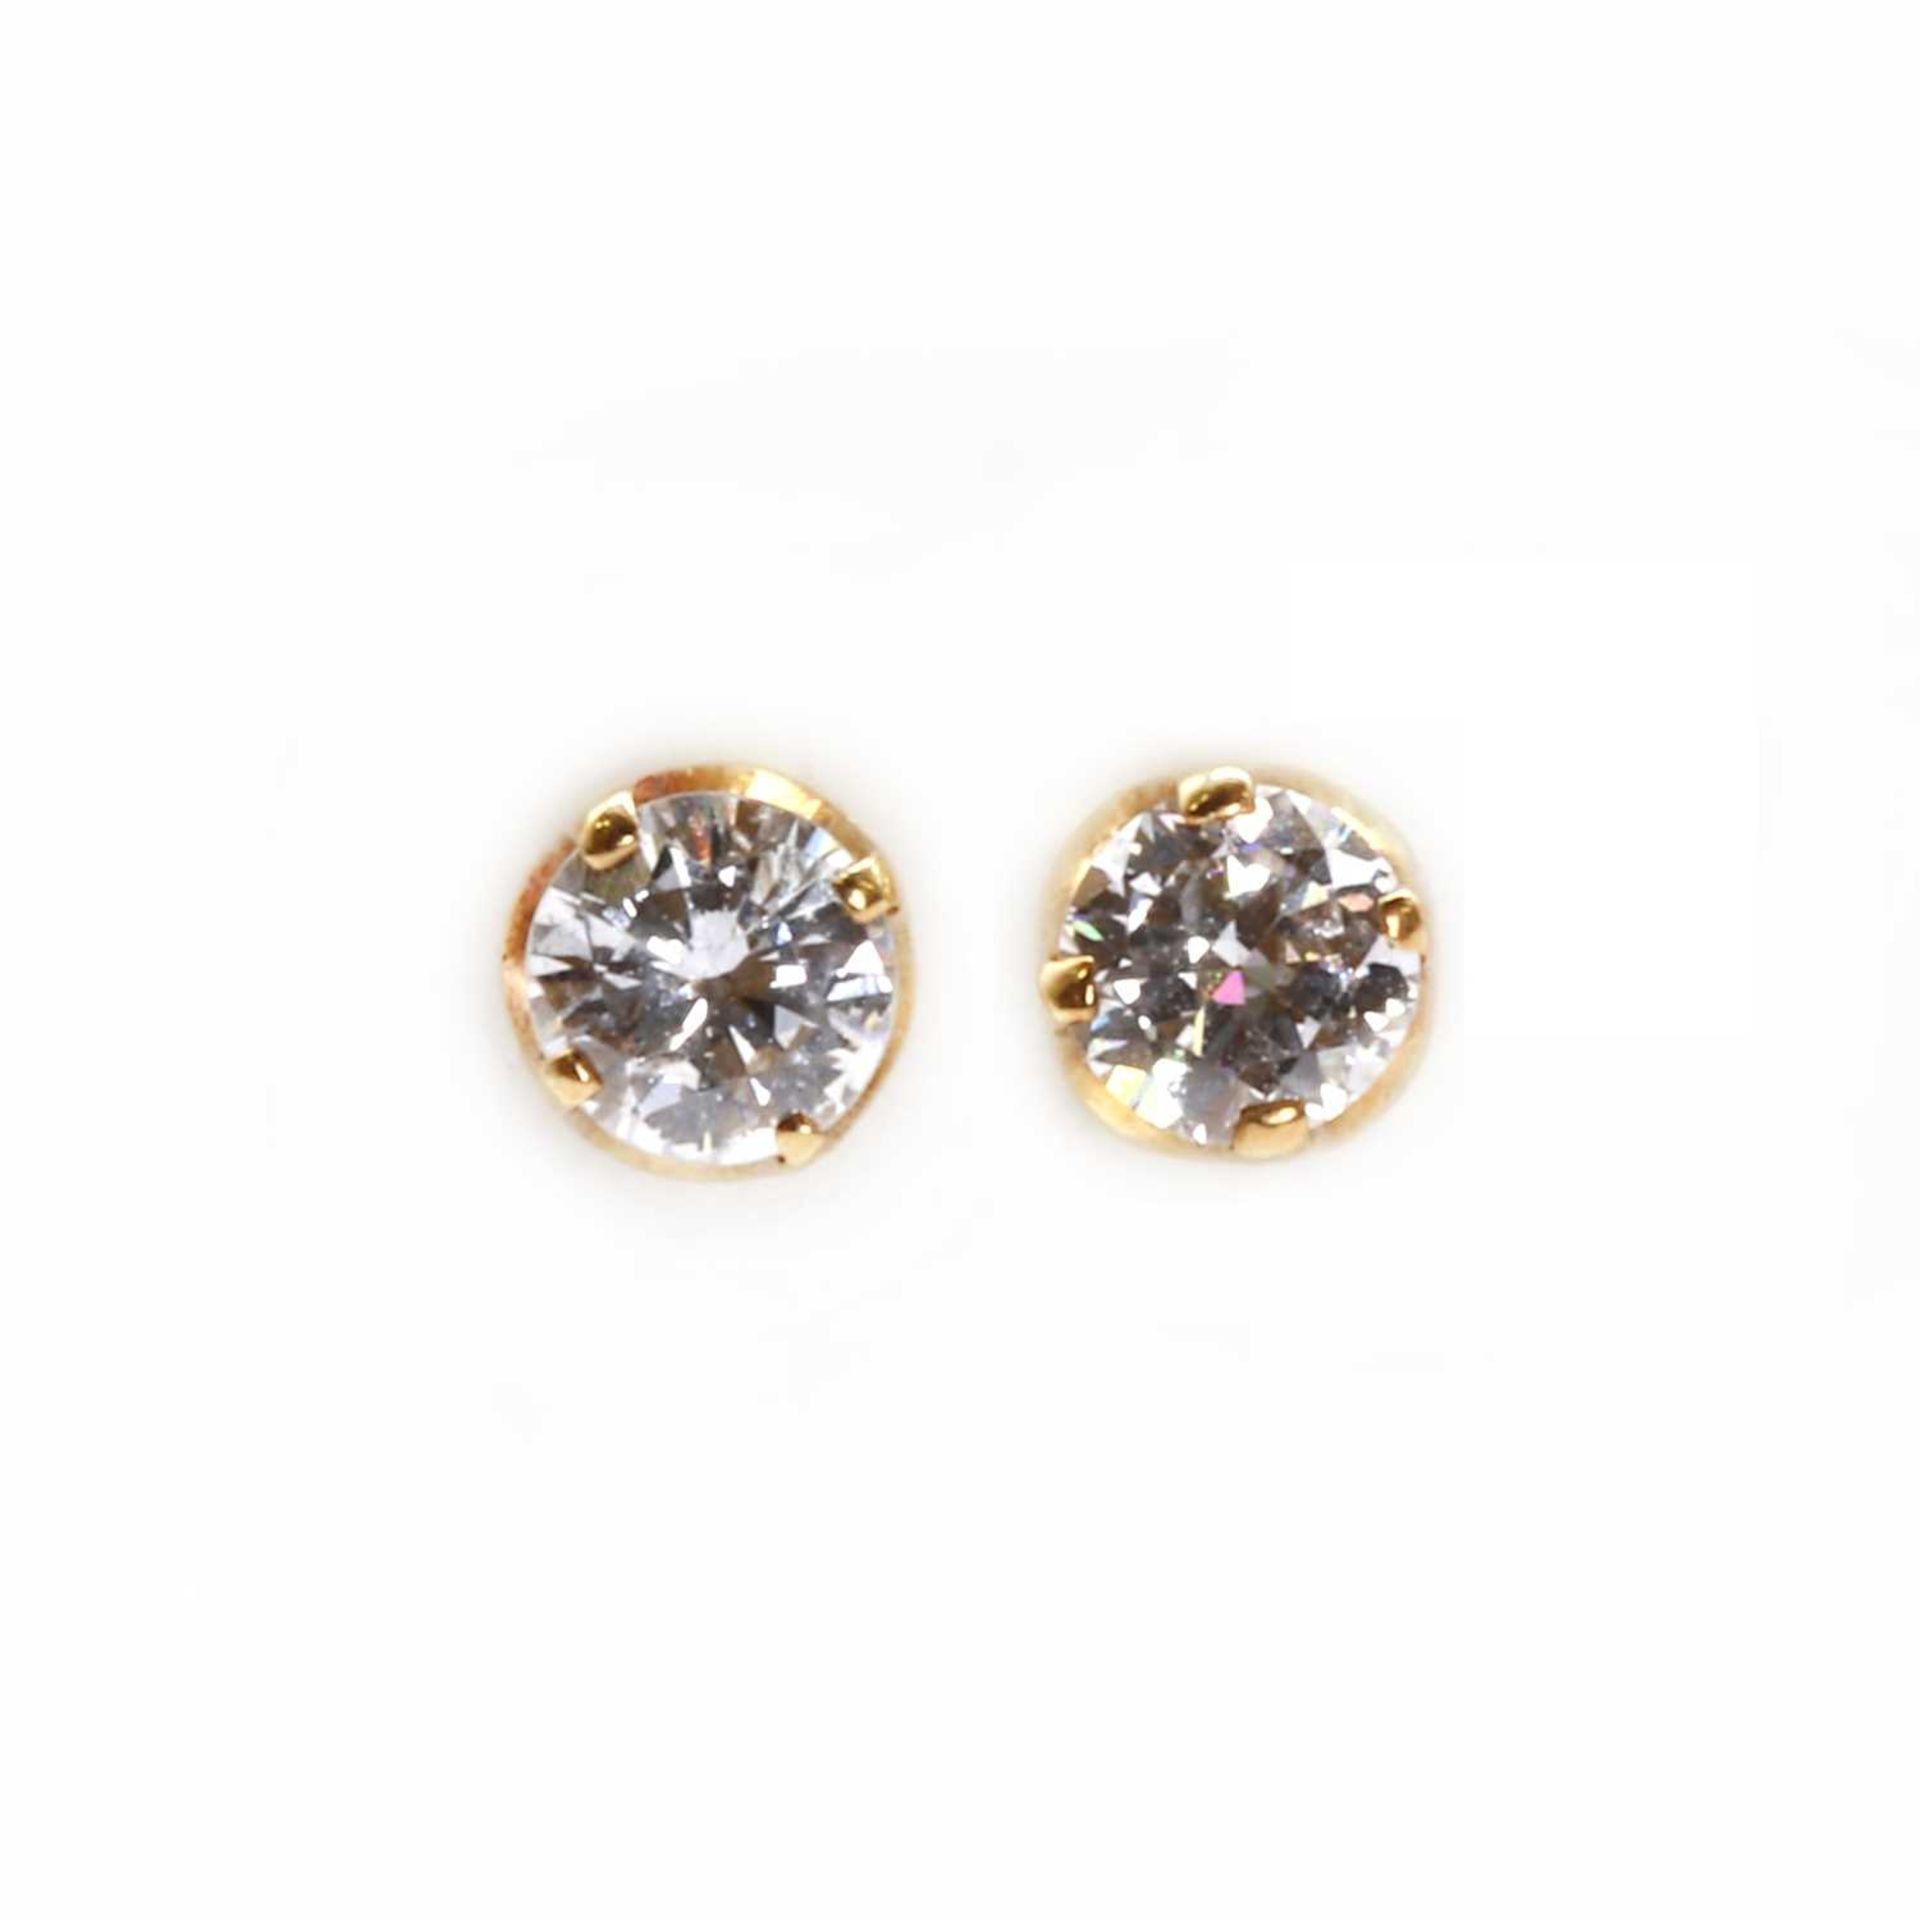 A pair of single stone diamond stud earrings,